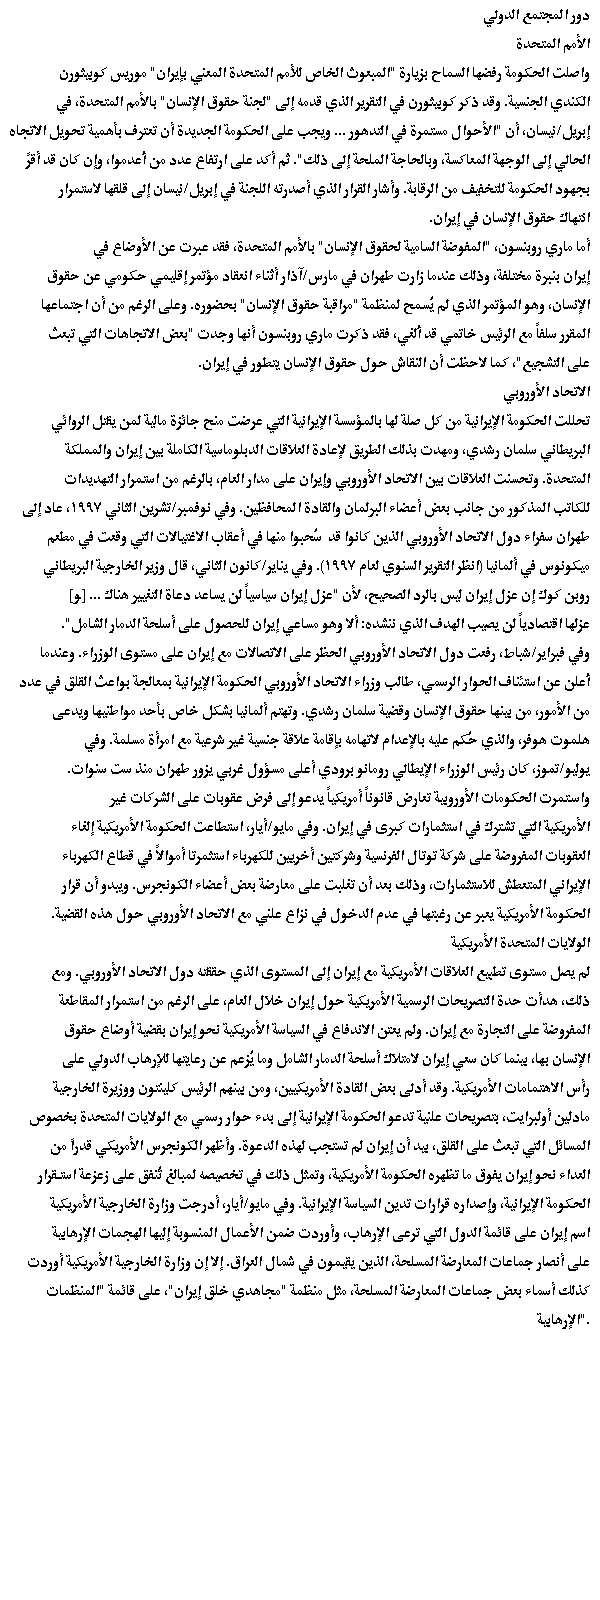 International Community Iran